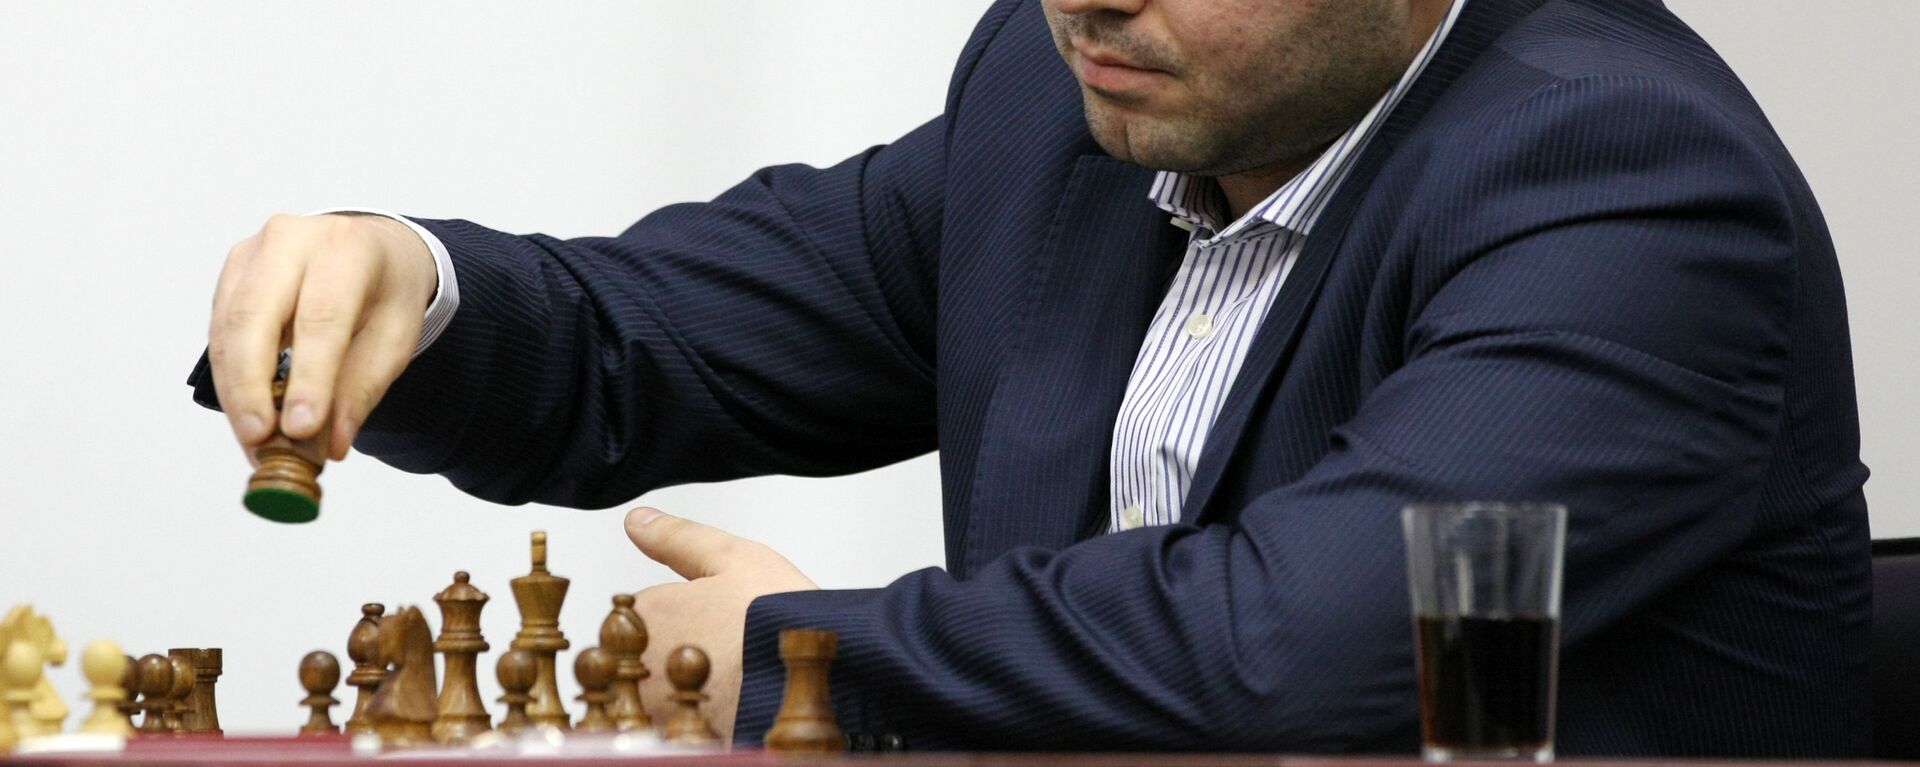 Азербайджанский гроссмейстер Шахрияр Мамедъяров - Sputnik Азербайджан, 1920, 09.03.2021